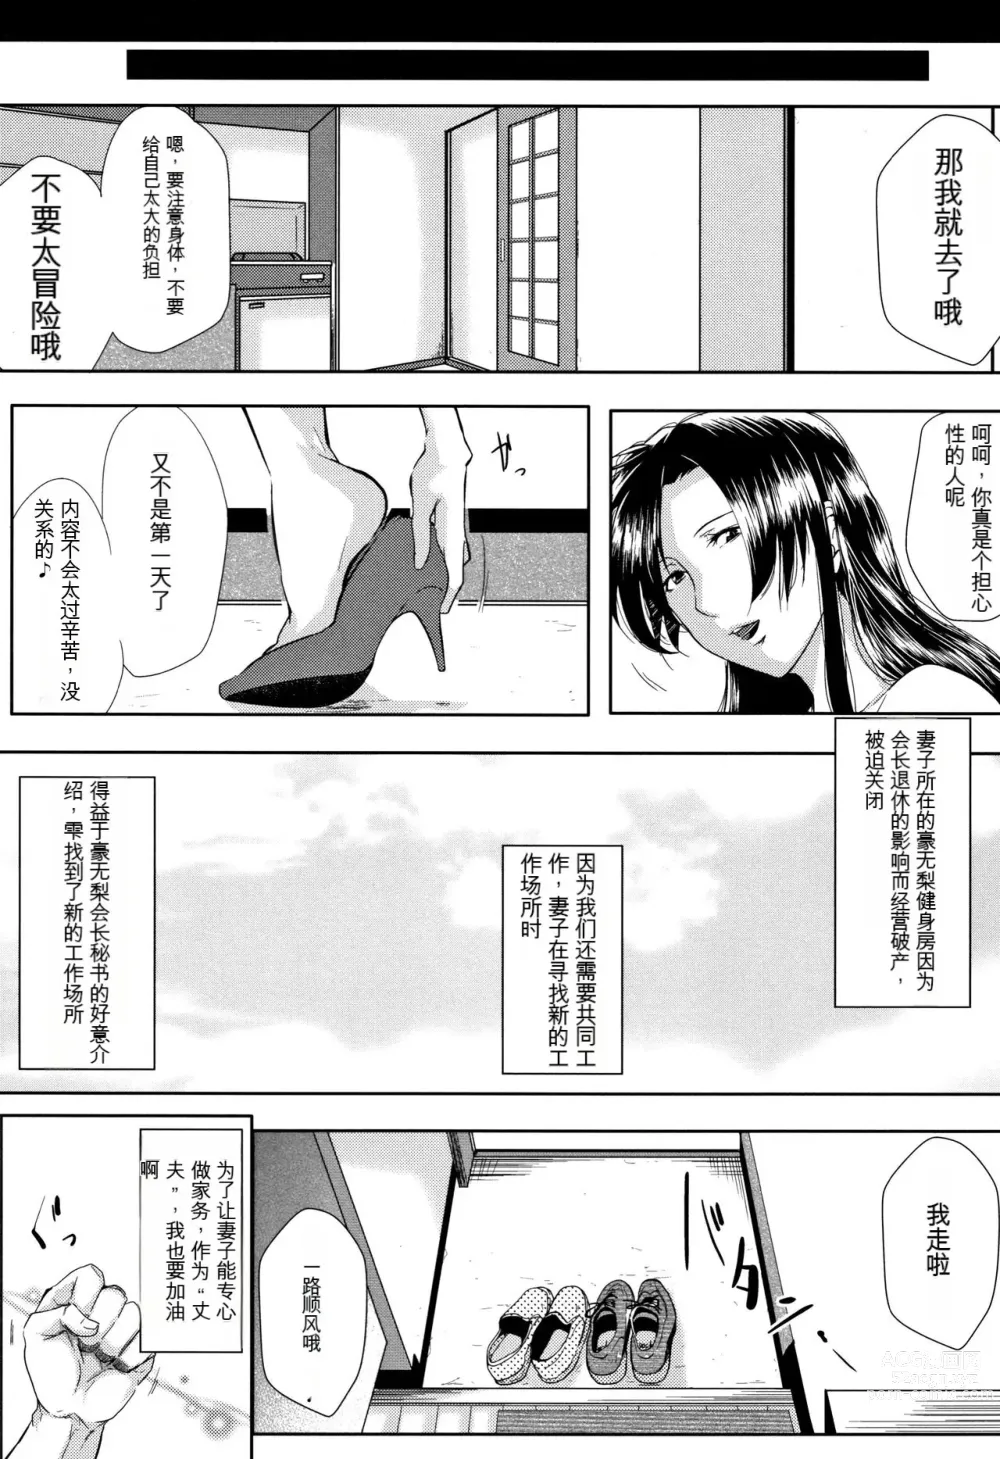 Page 200 of manga Tsuma wa Instructor - MY WIFE IS BAWDY INSTRUCTOR